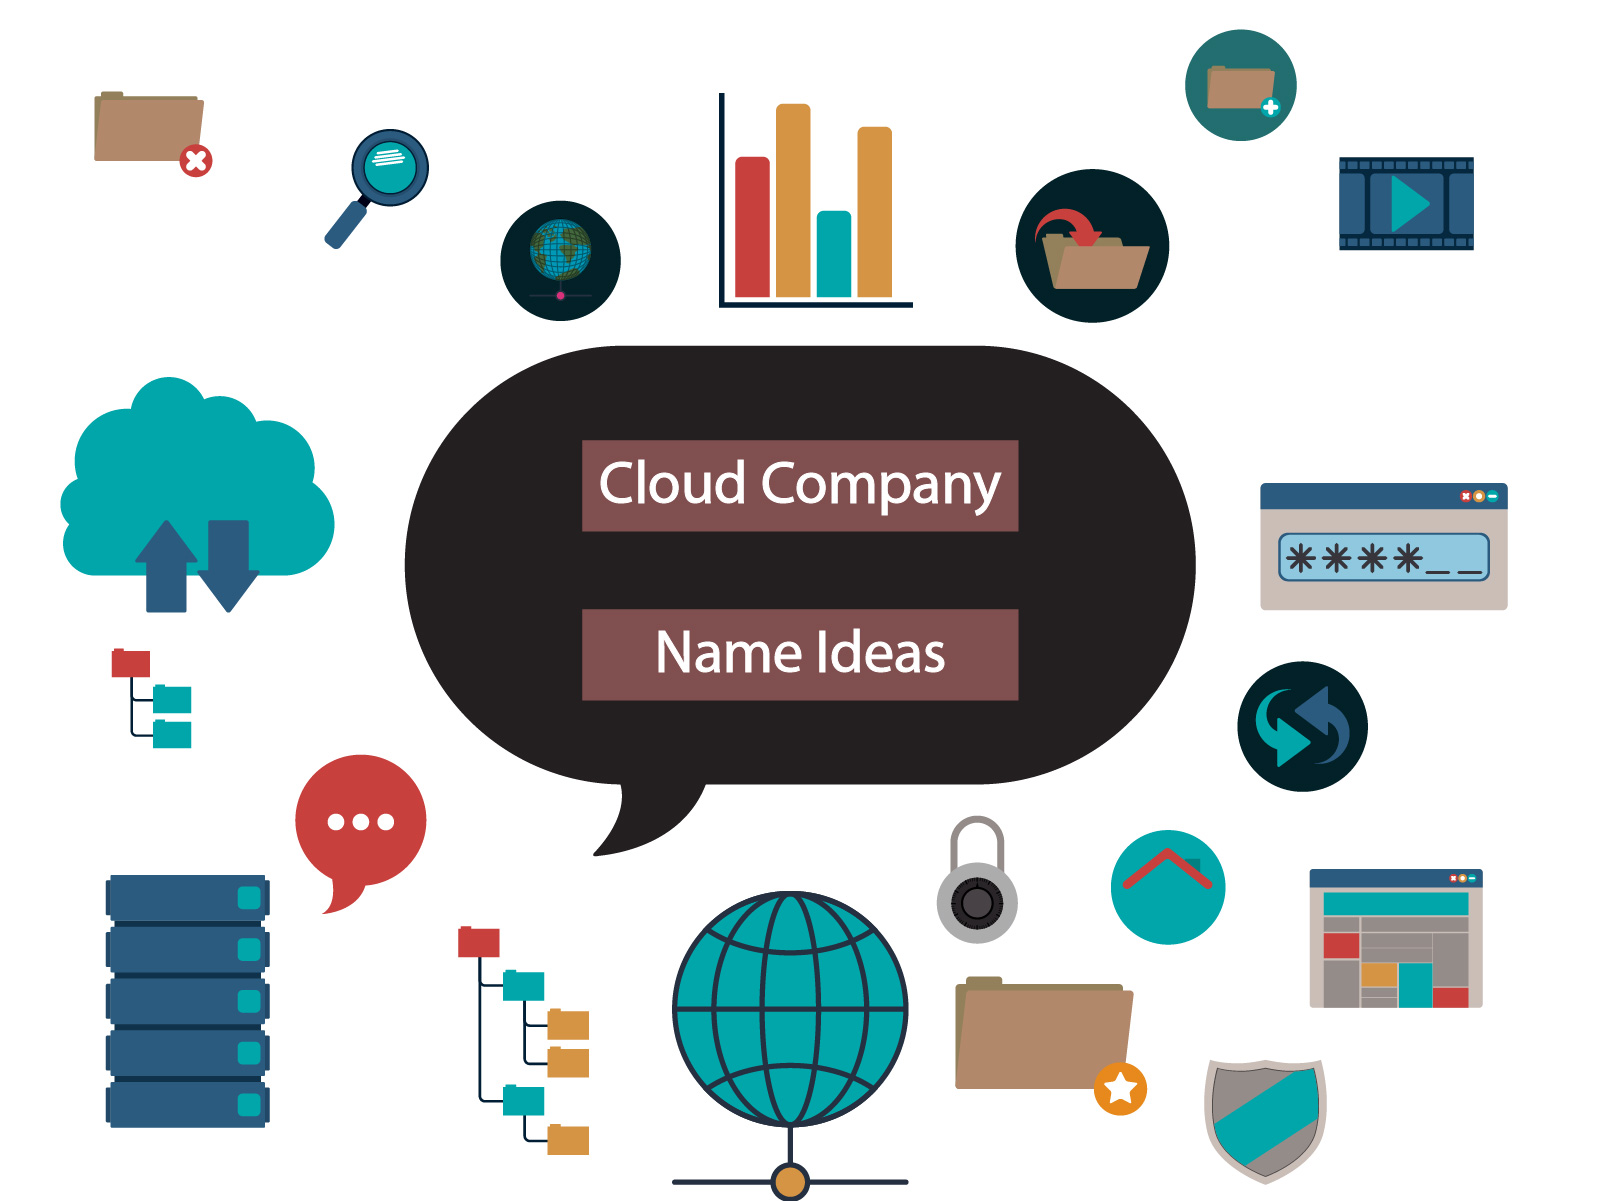 Cloud Company Name ideas